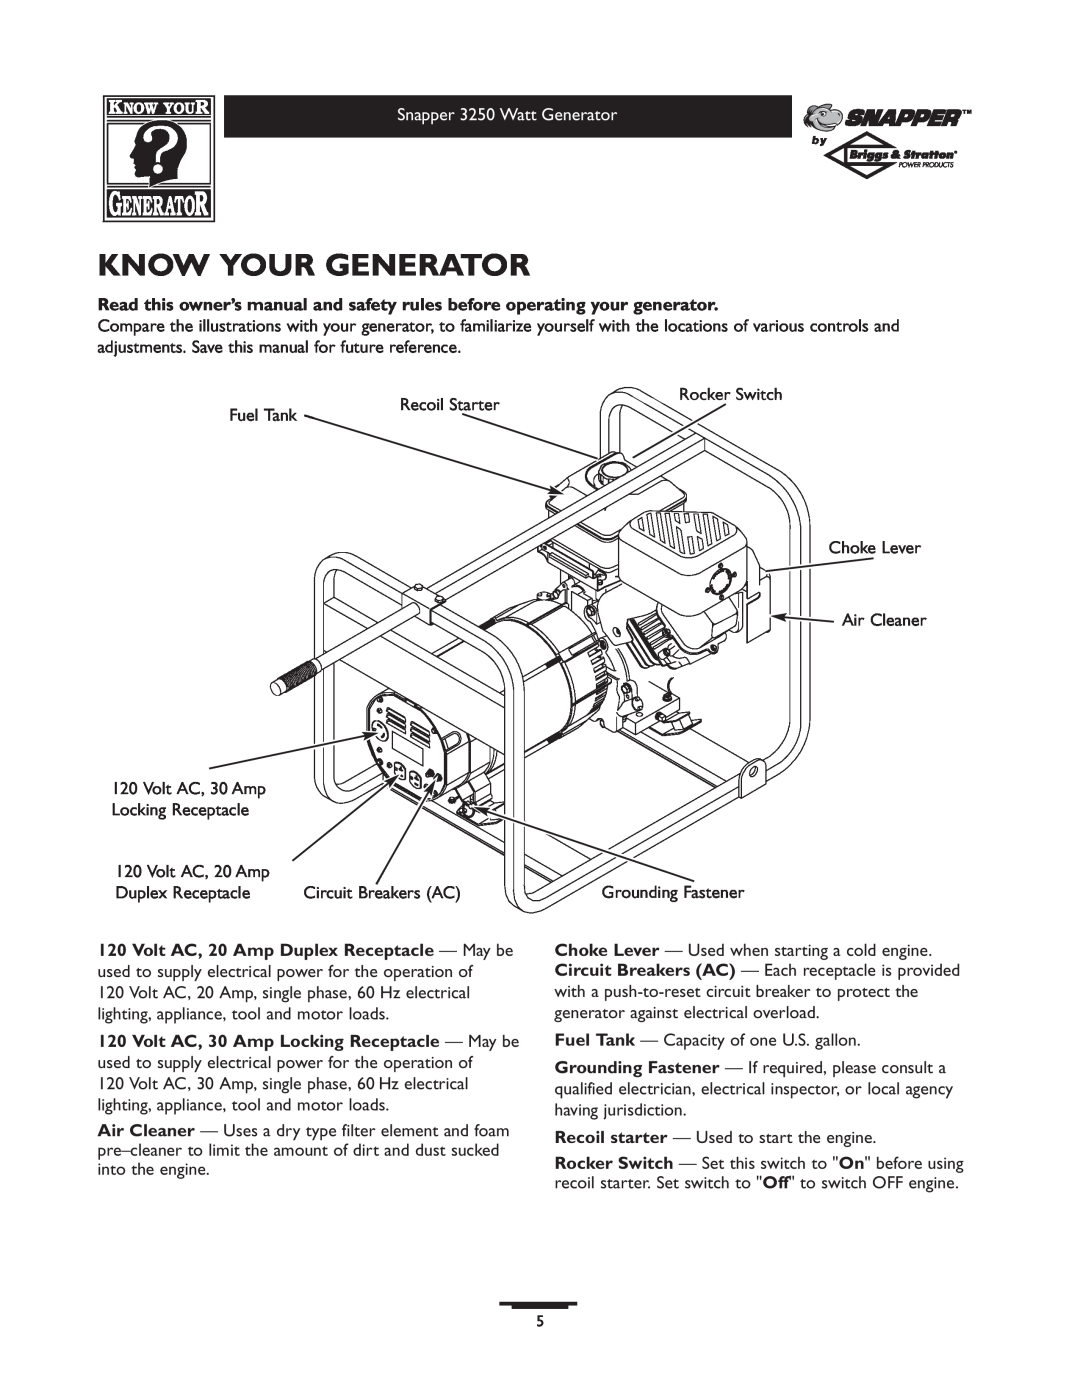 Snapper 1667-0 owner manual Know Your Generator, Snapper 3250 Watt Generator 